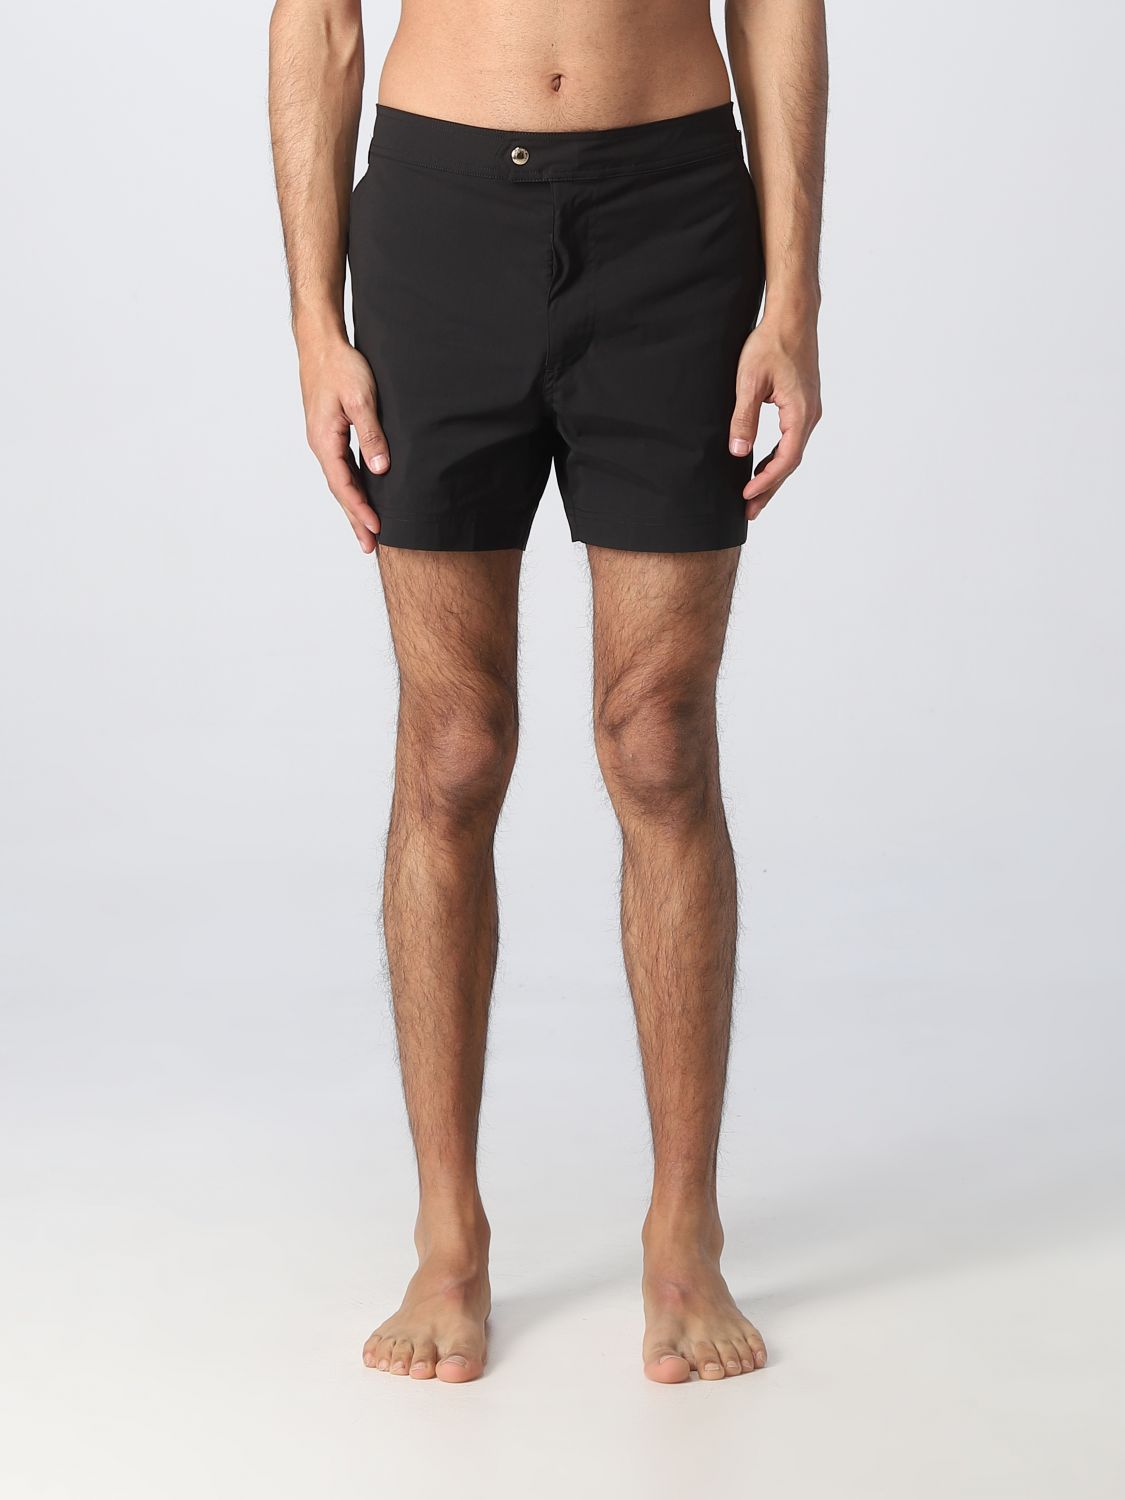 TOM FORD: swimsuit for man - Black | Tom Ford swimsuit BSS001FMN004S23 ...